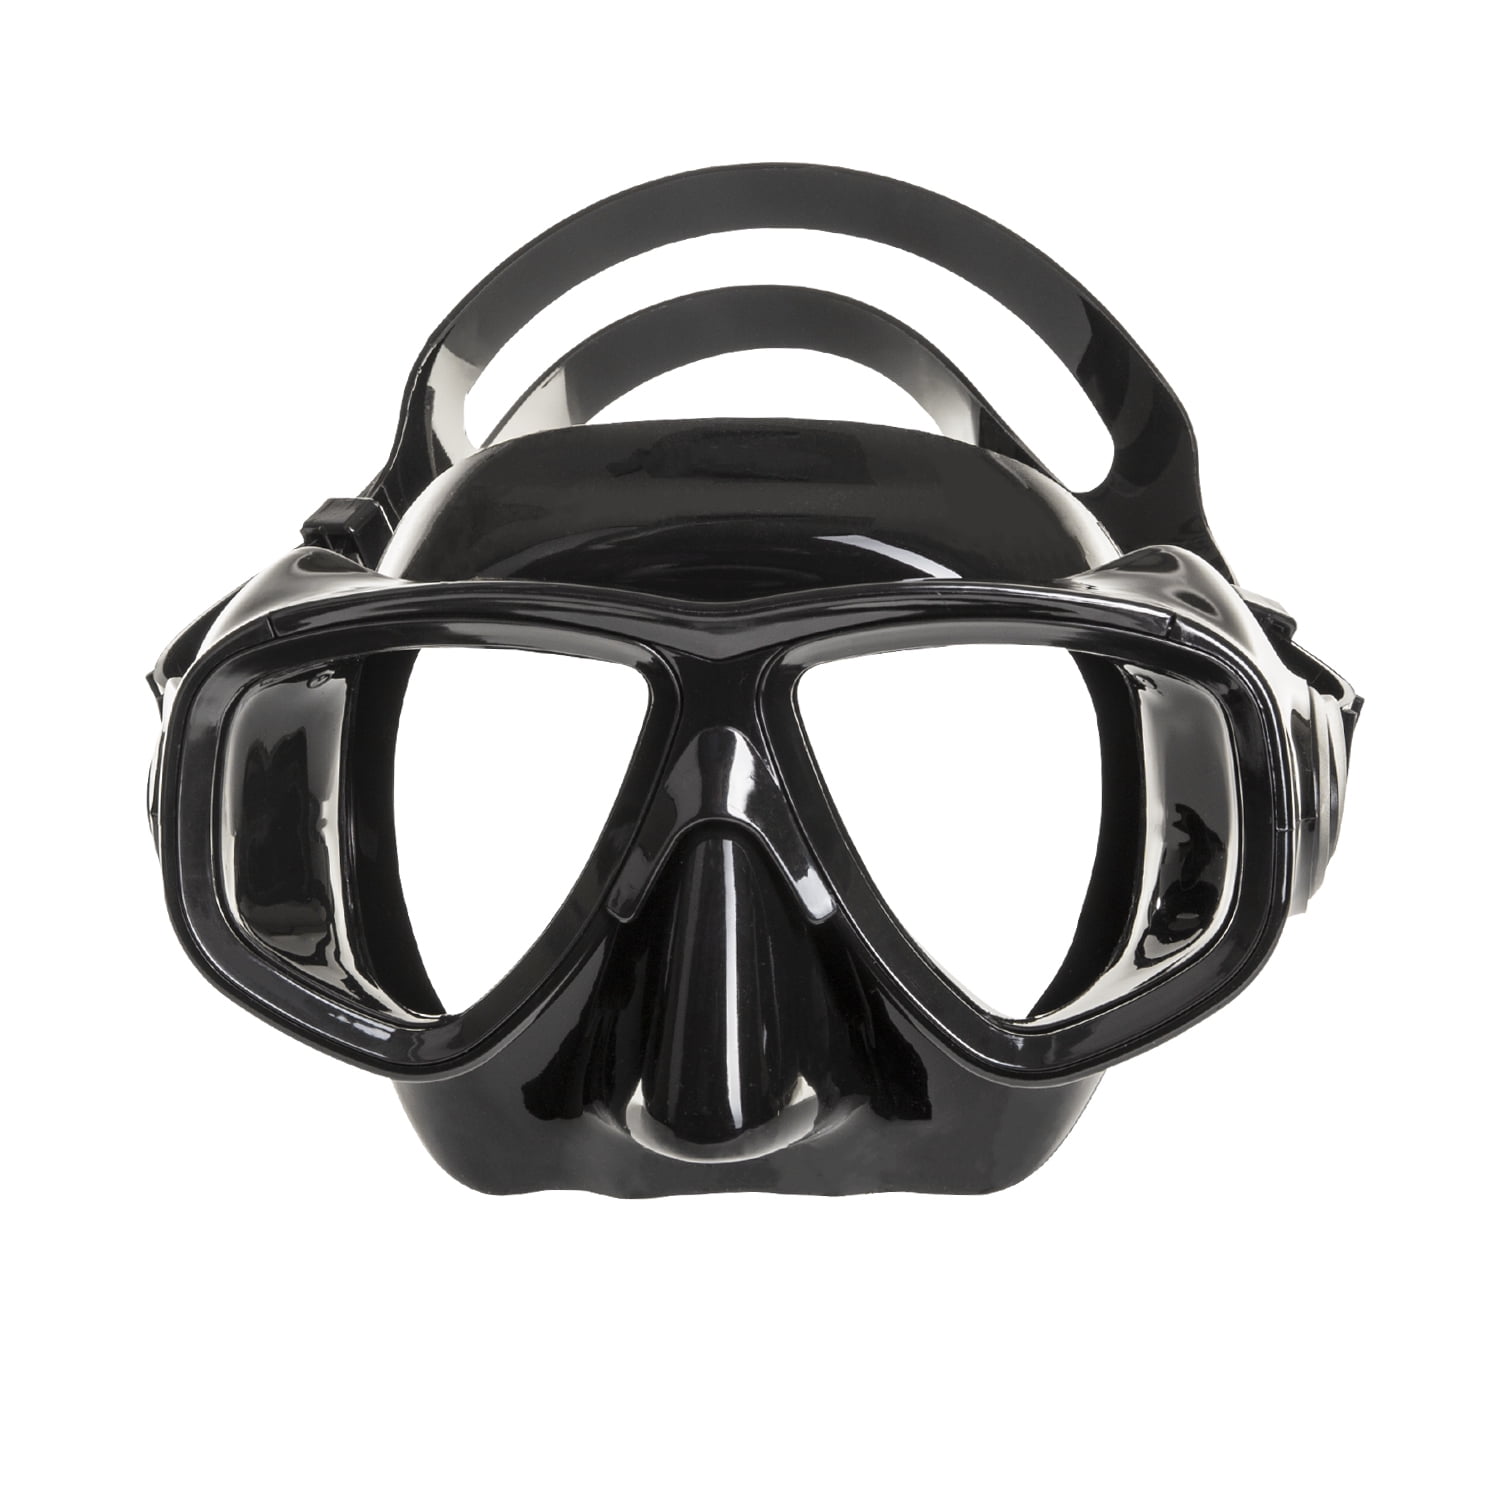 Palantic Black Dive Mask Nearsighted Prescription RX Optical Lenses